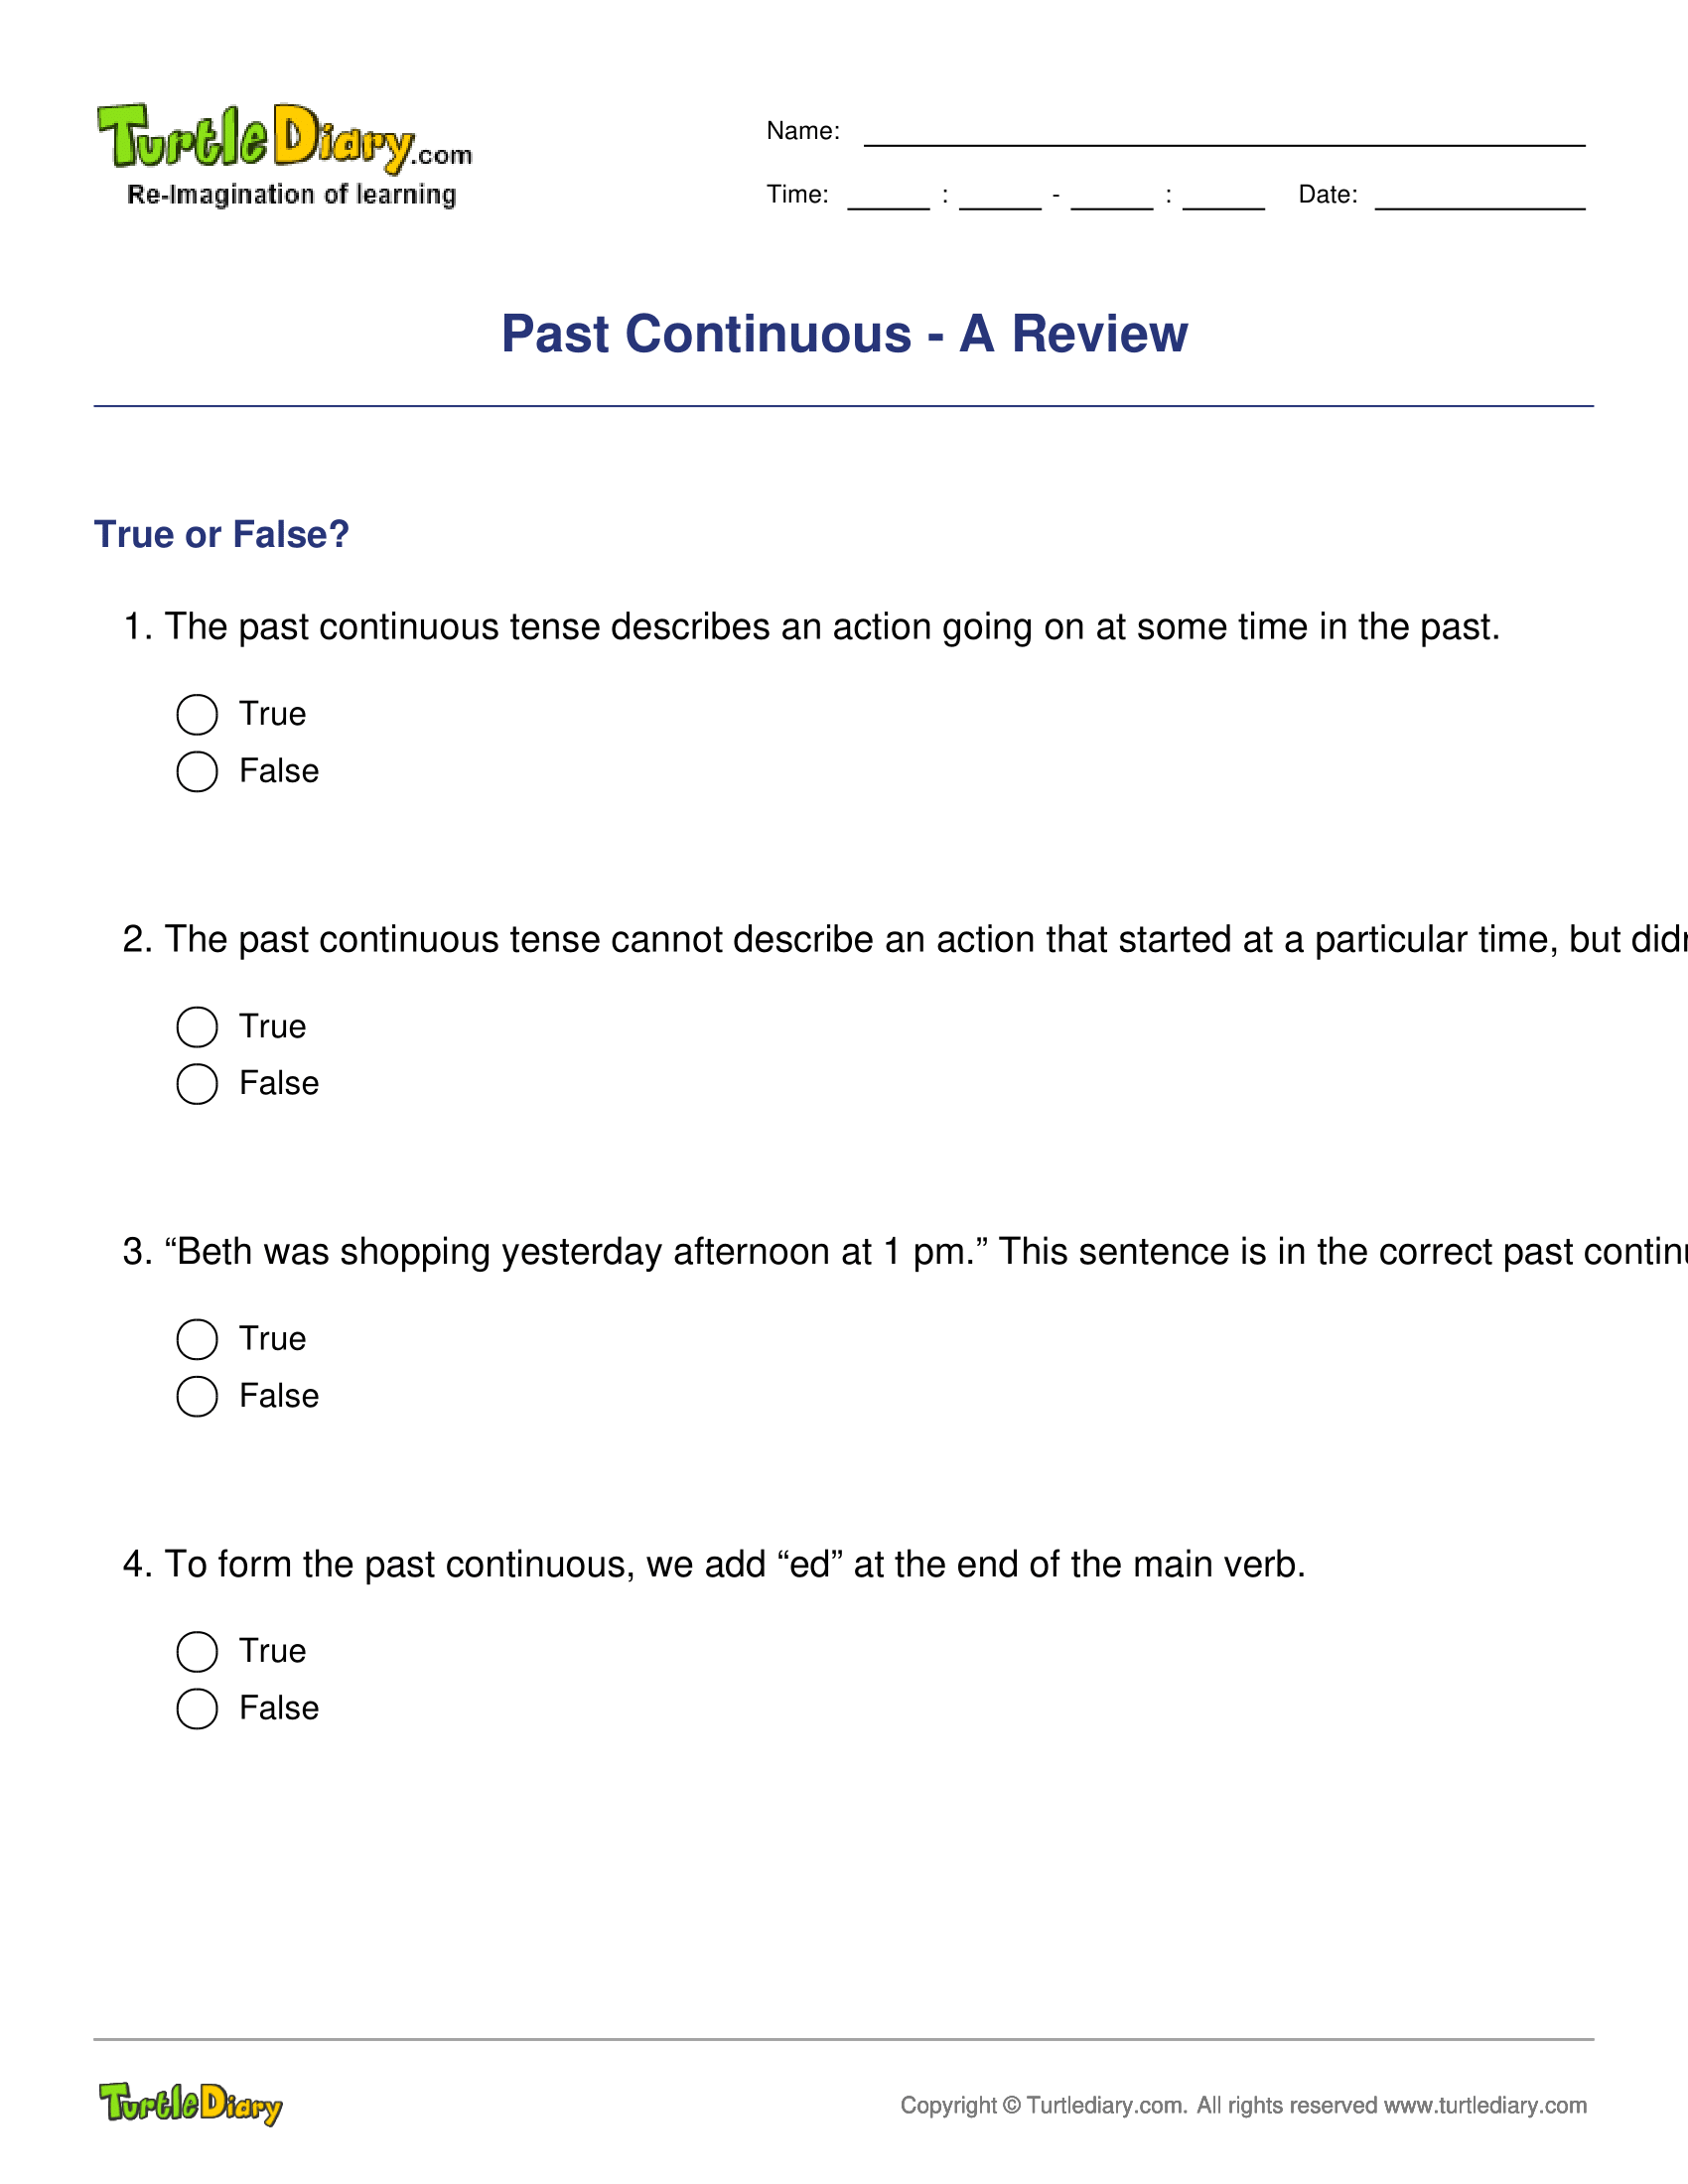 Past Continuous - A Review